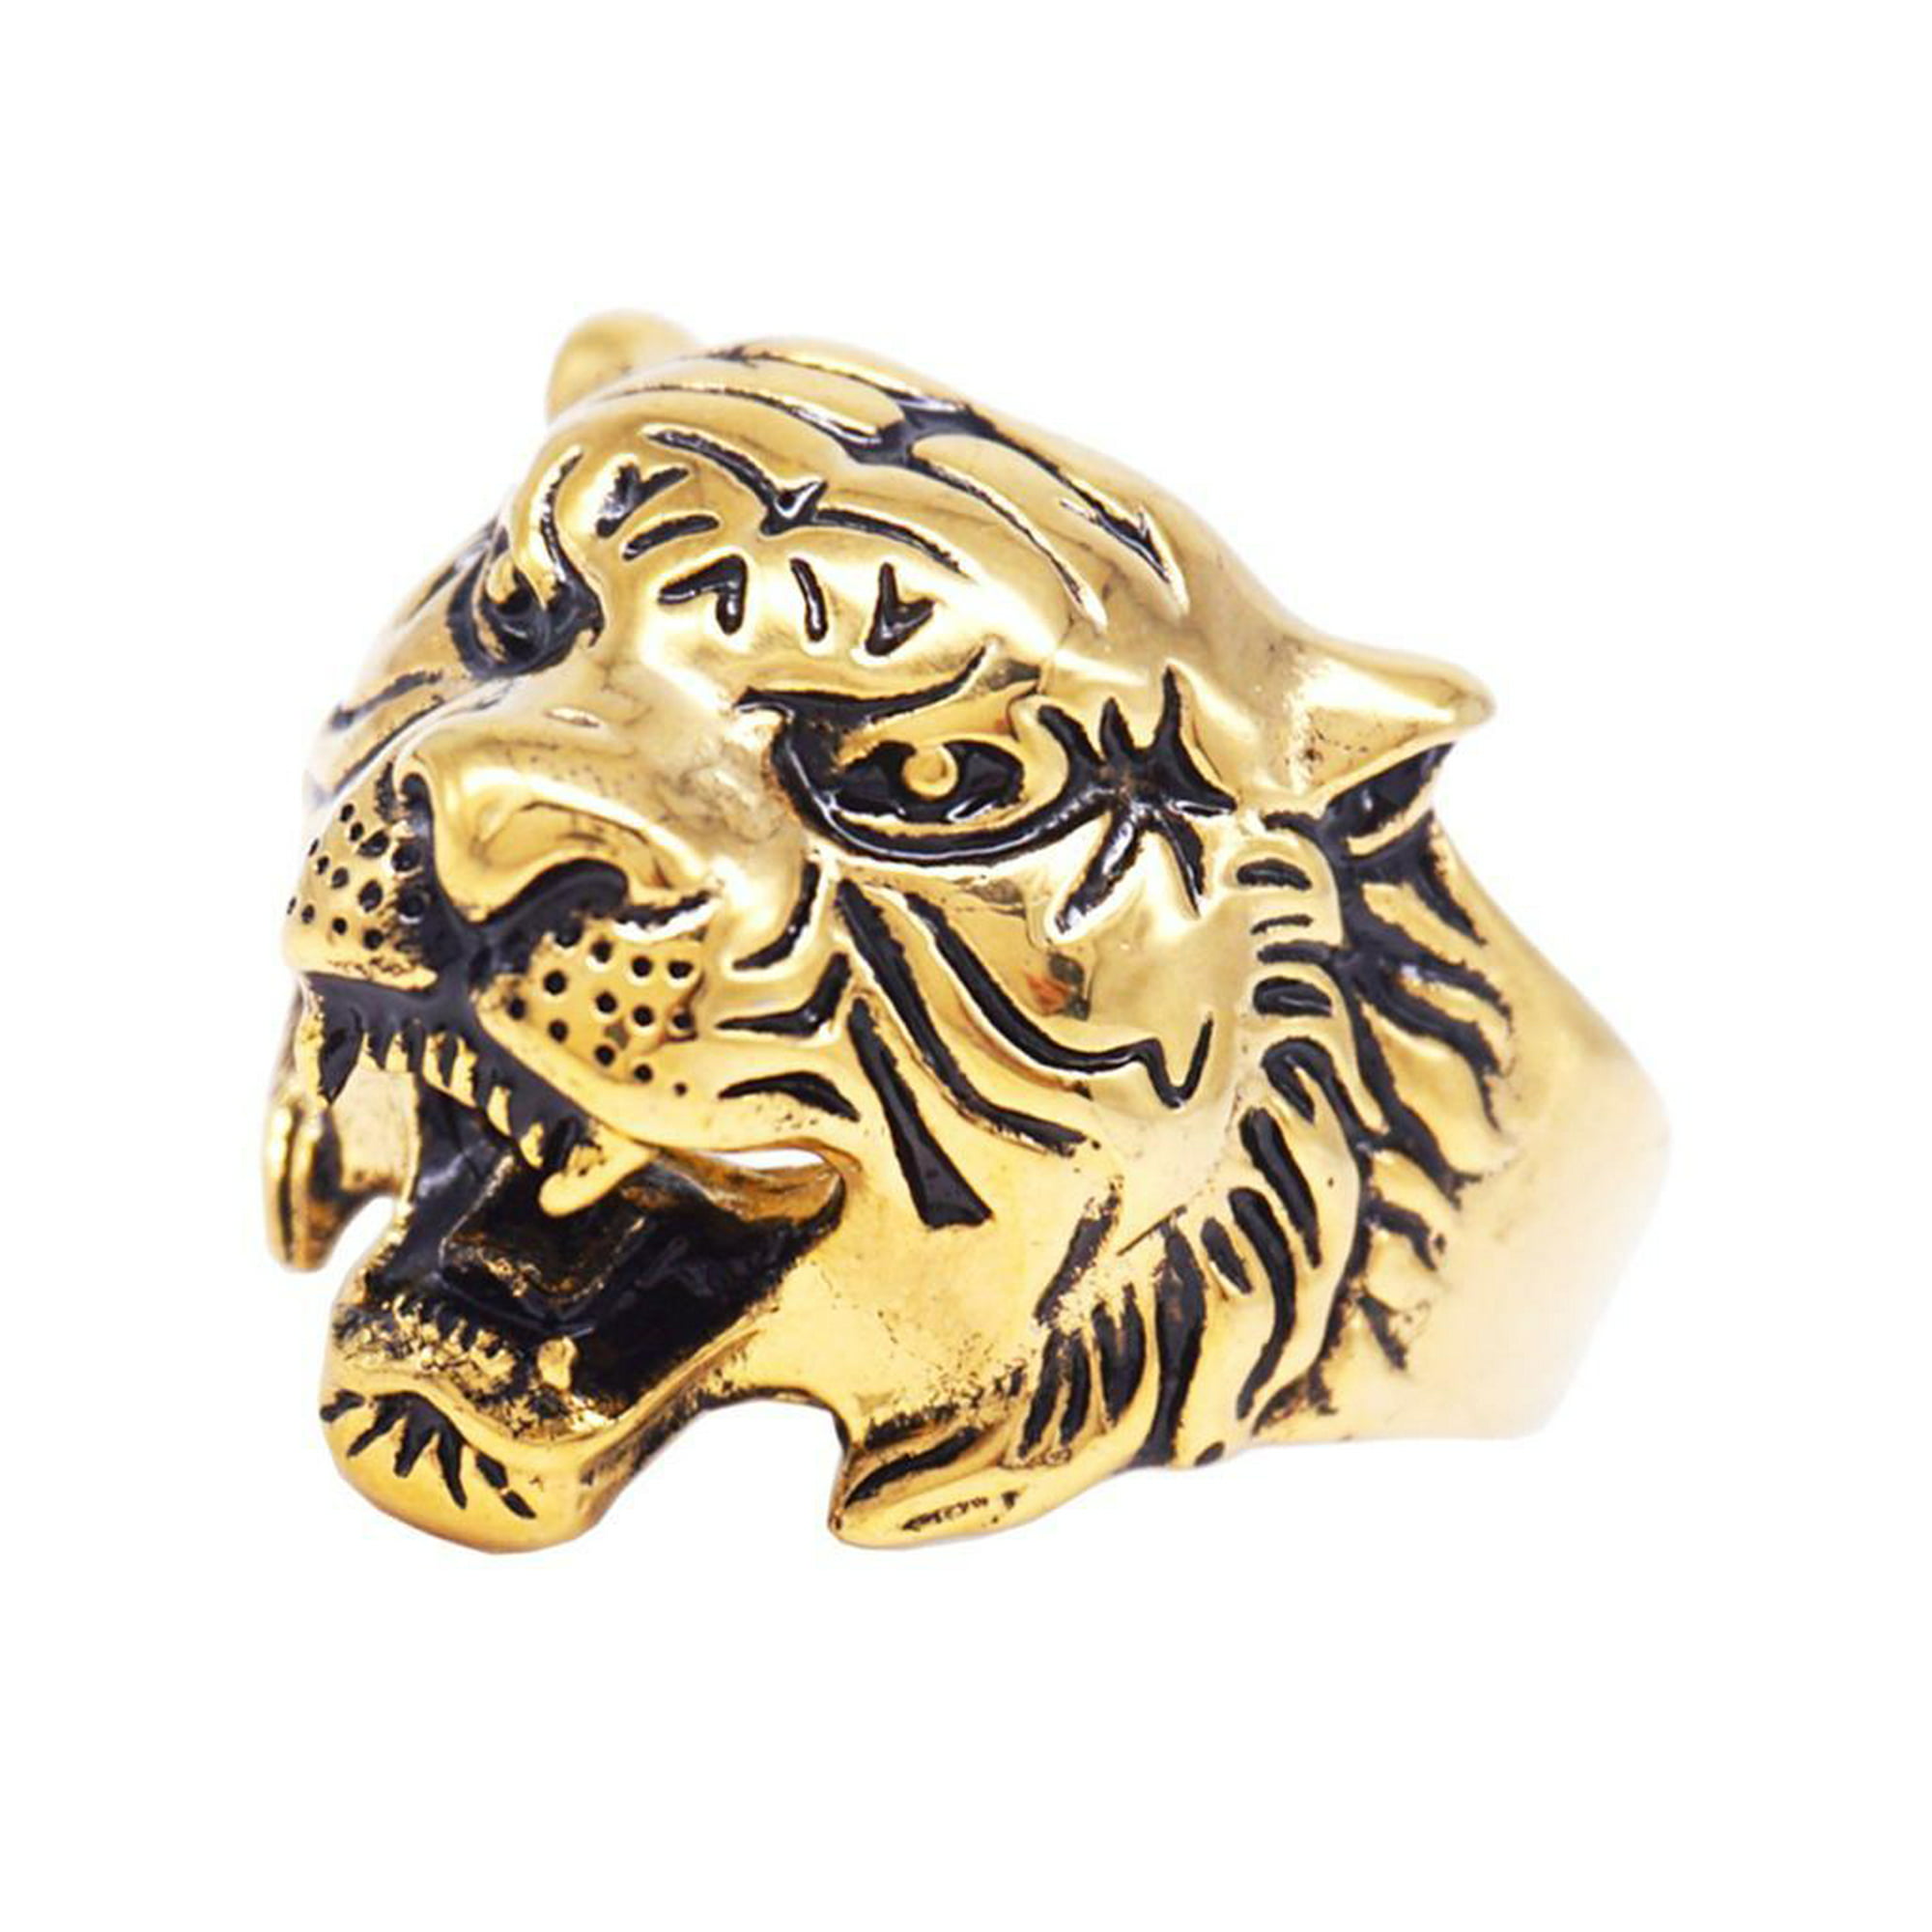 Tigre anillo - anillo ciclista - para hombre - acero inoxidable titanio acero  anillo - anillo de cabeza de tigre pa…